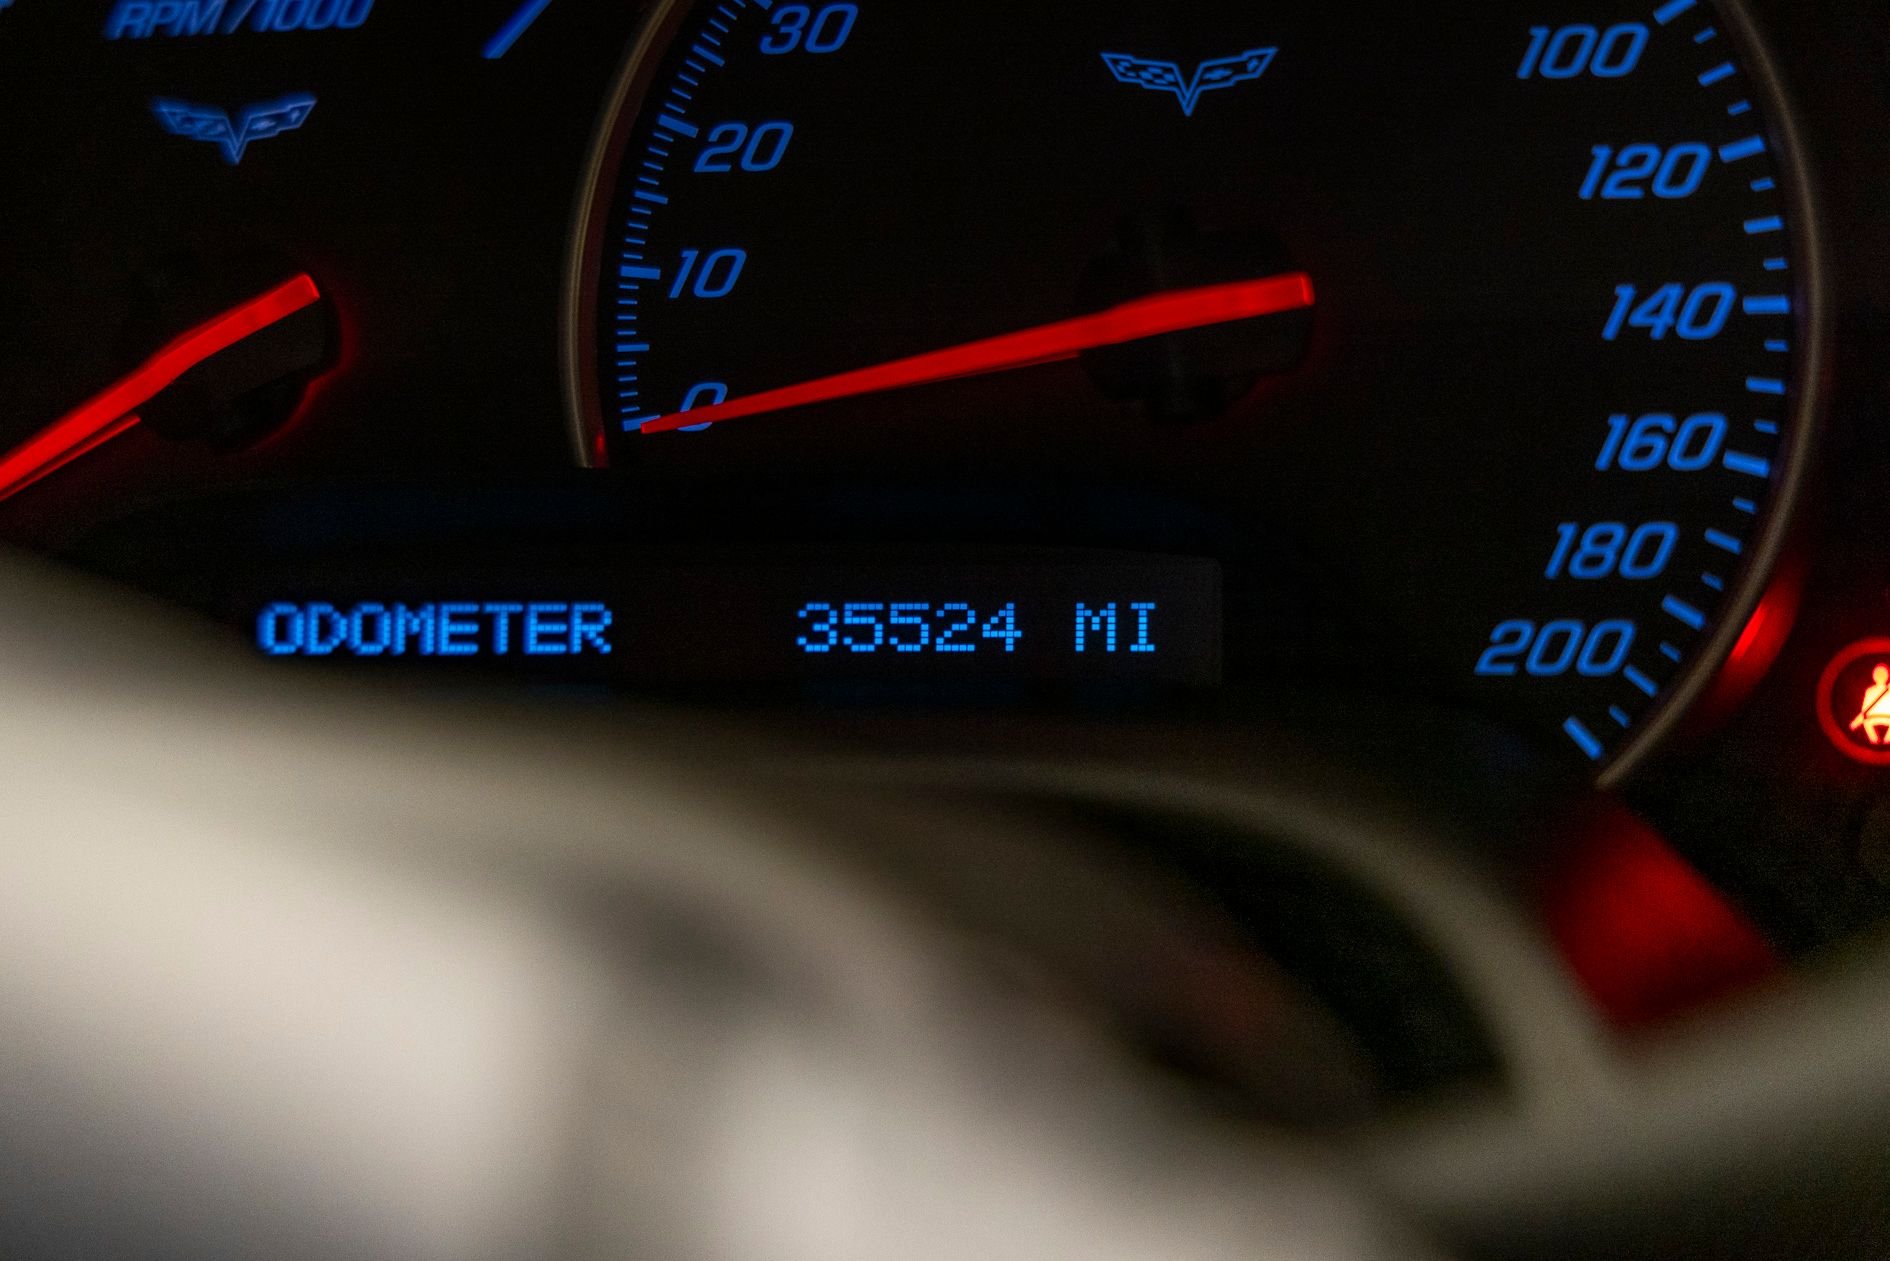 813411 | 2005 Chevrolet Corvette Convertible | Throttlestop | Automotive and Motorcycle Consignment Dealer